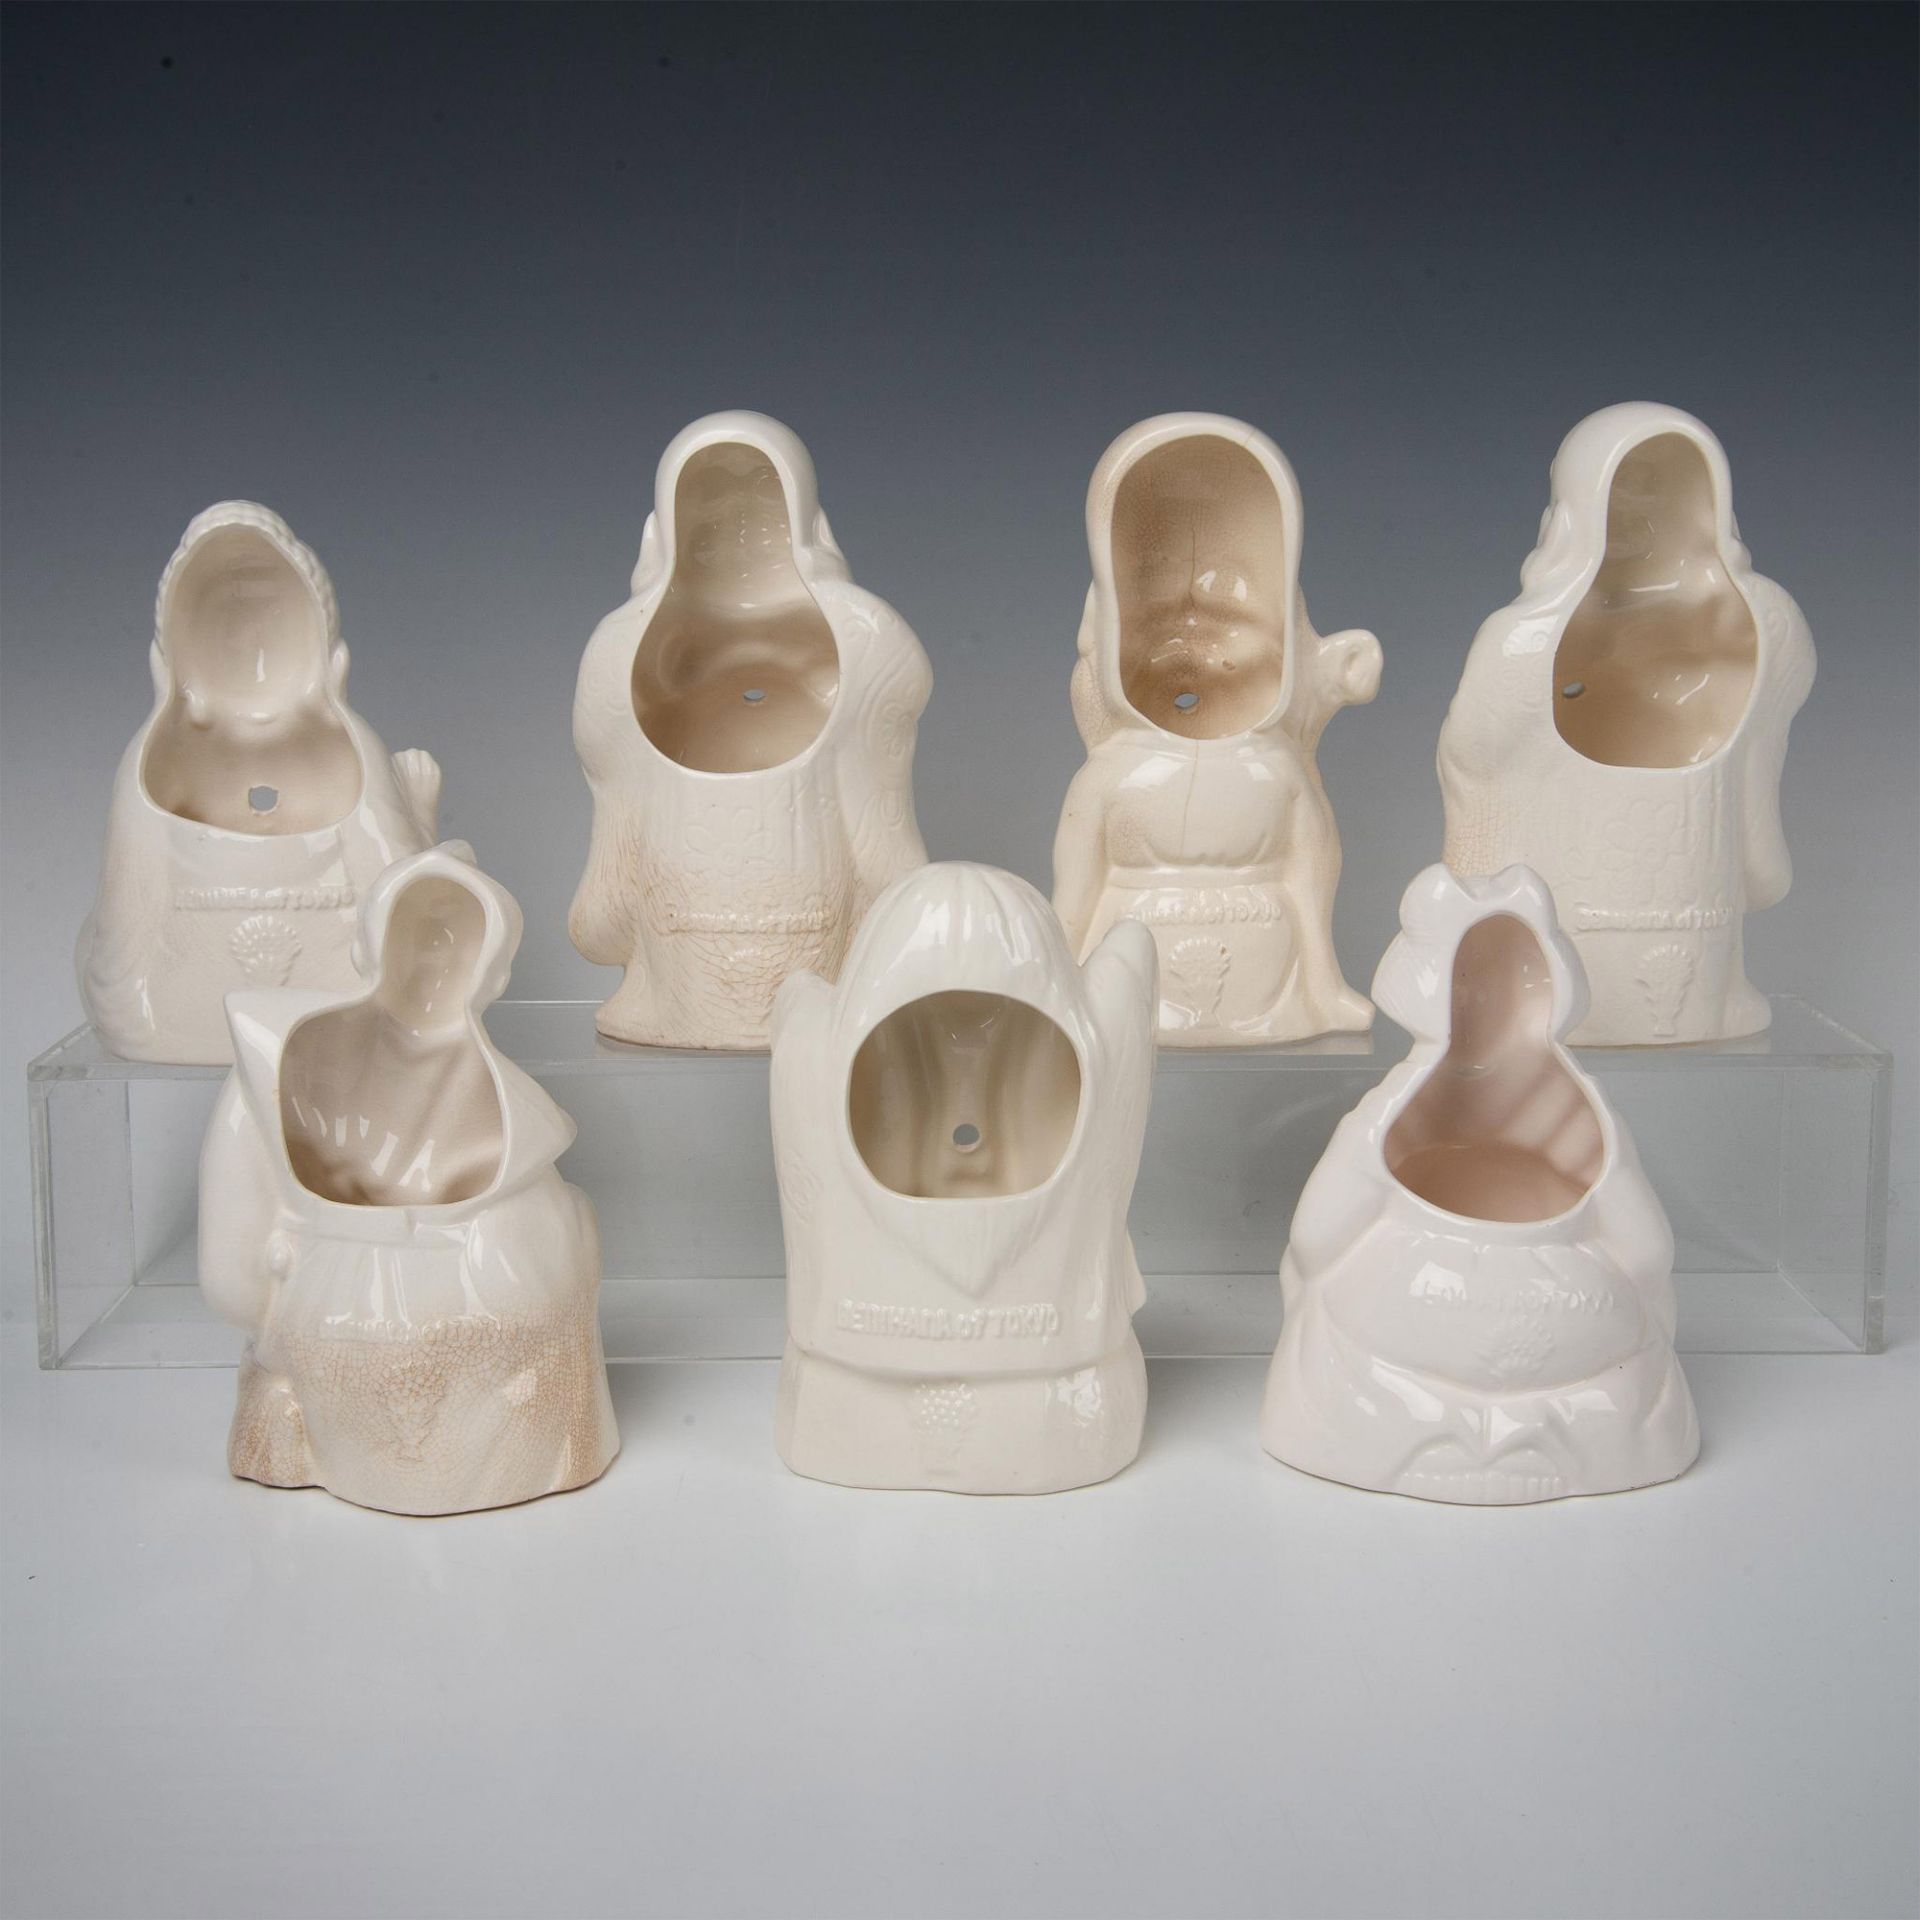 7pc Grouping of Vintage Figural Benihana Ceramic Mugs - Image 2 of 4